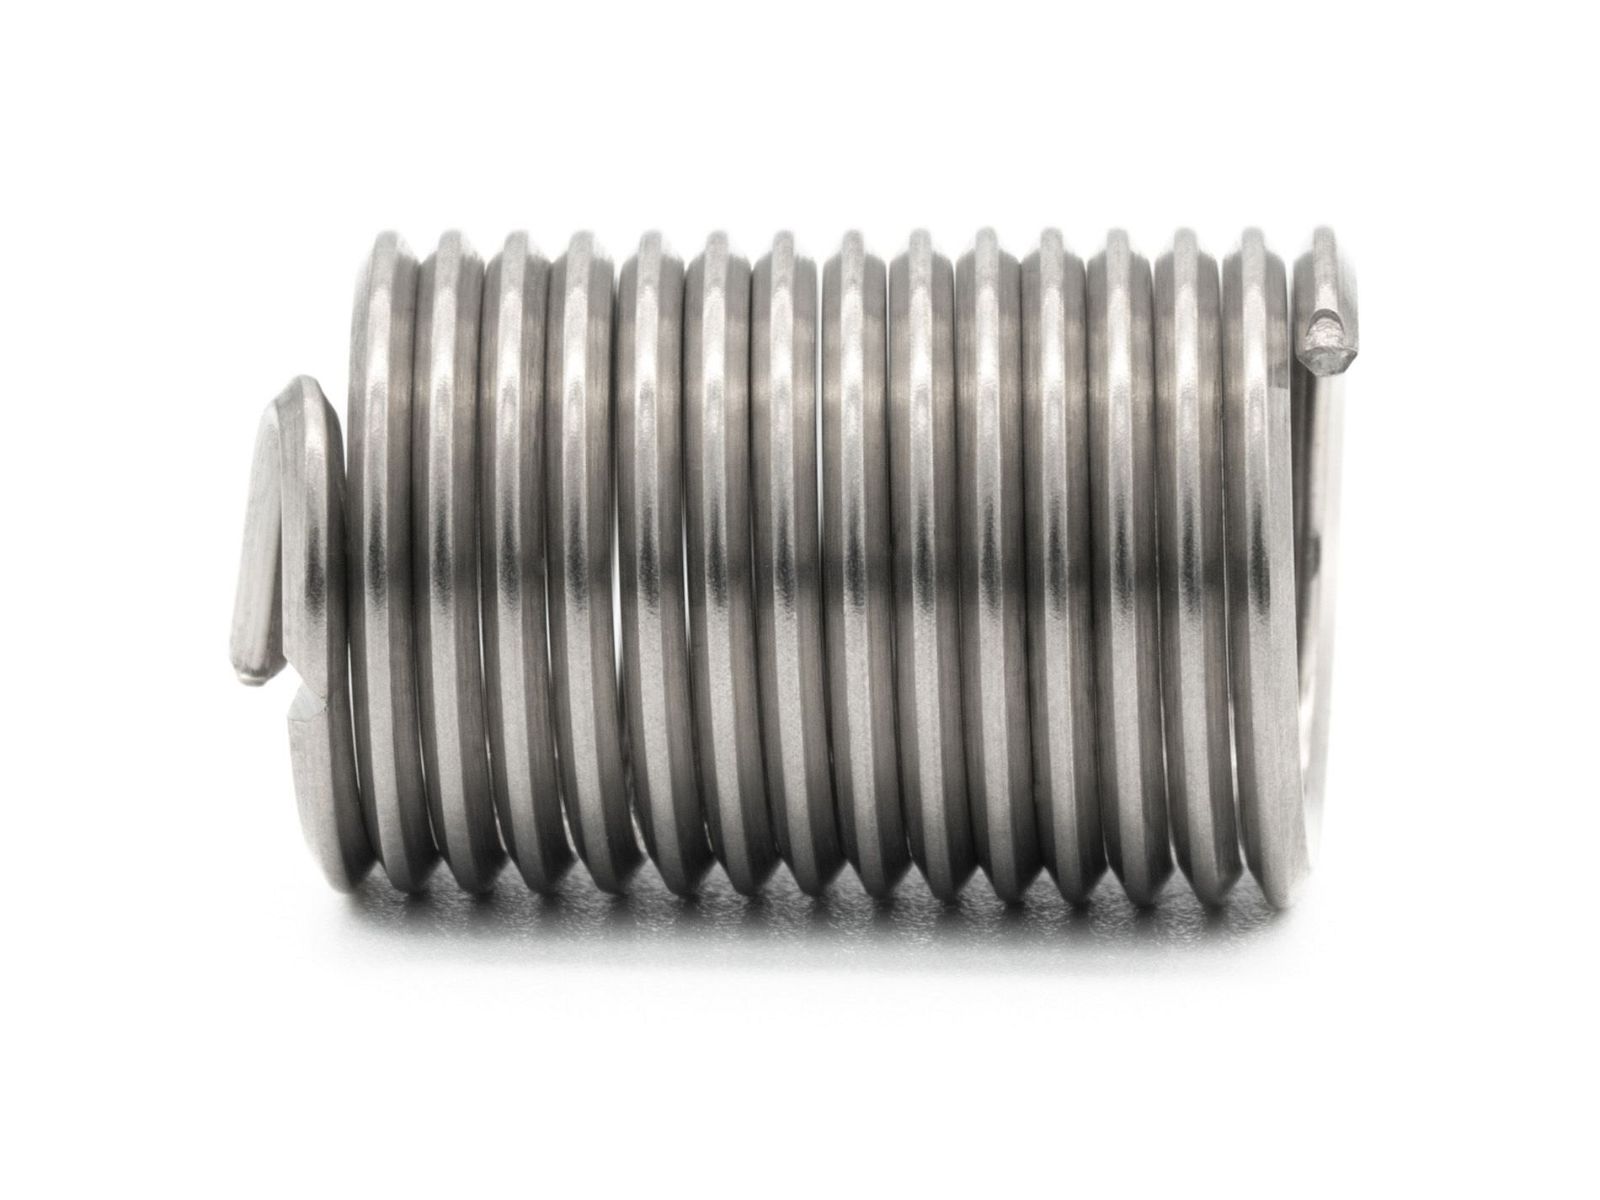 BaerCoil Wire Thread Inserts UNC No. 10 x 24 - 2.5 D (12.07 mm) - free running - 10 pcs.